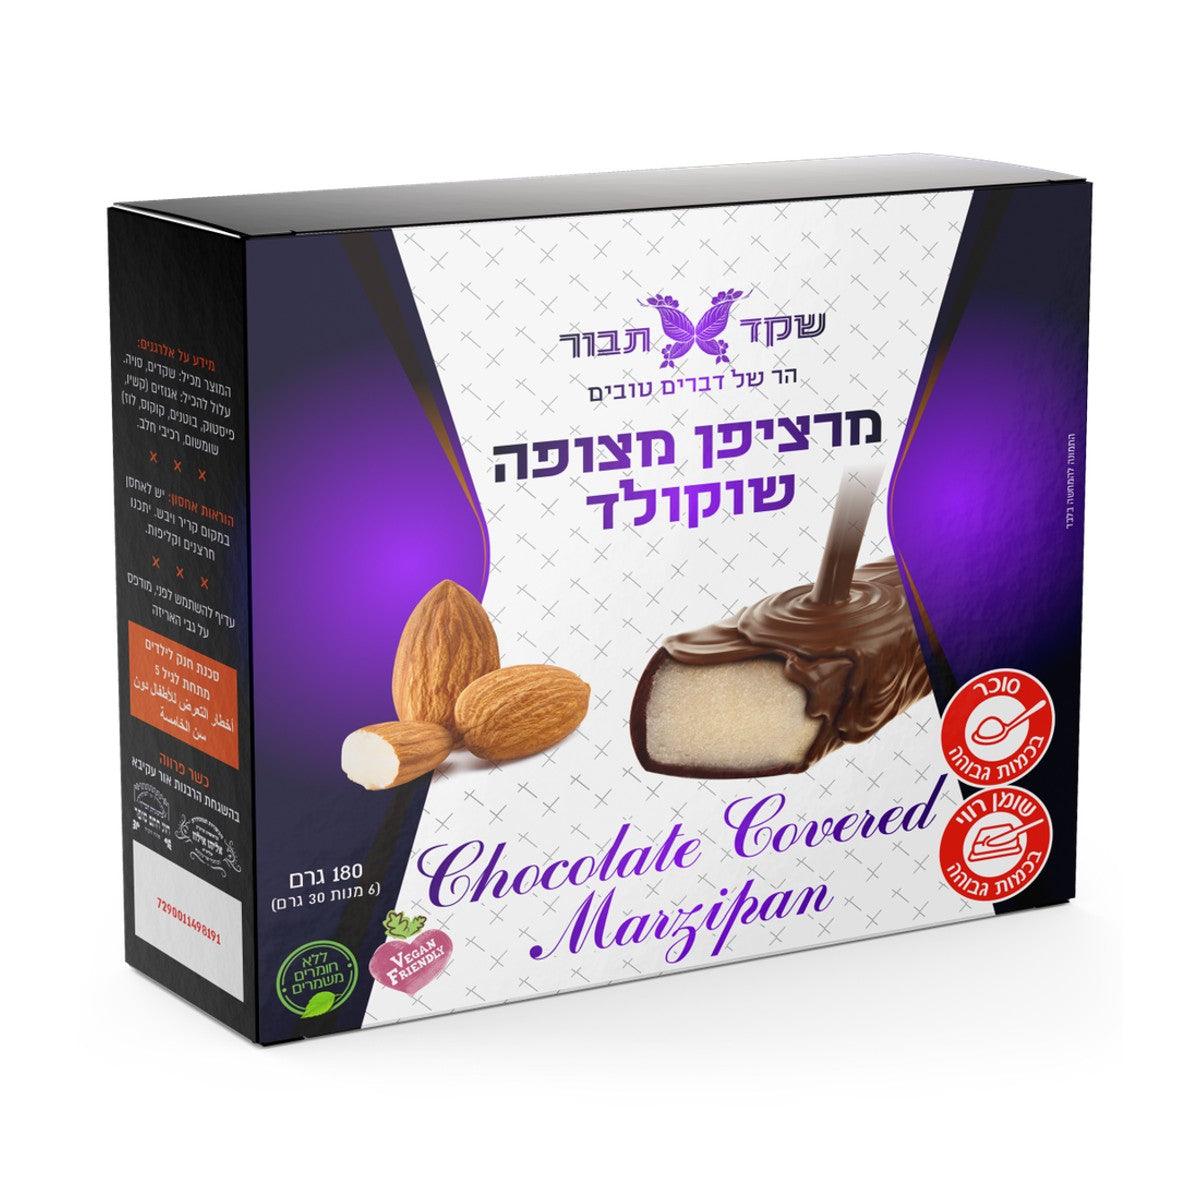 Dark chocolate coated marzipan sugar-free - Shaked Tavor - Israel Menu